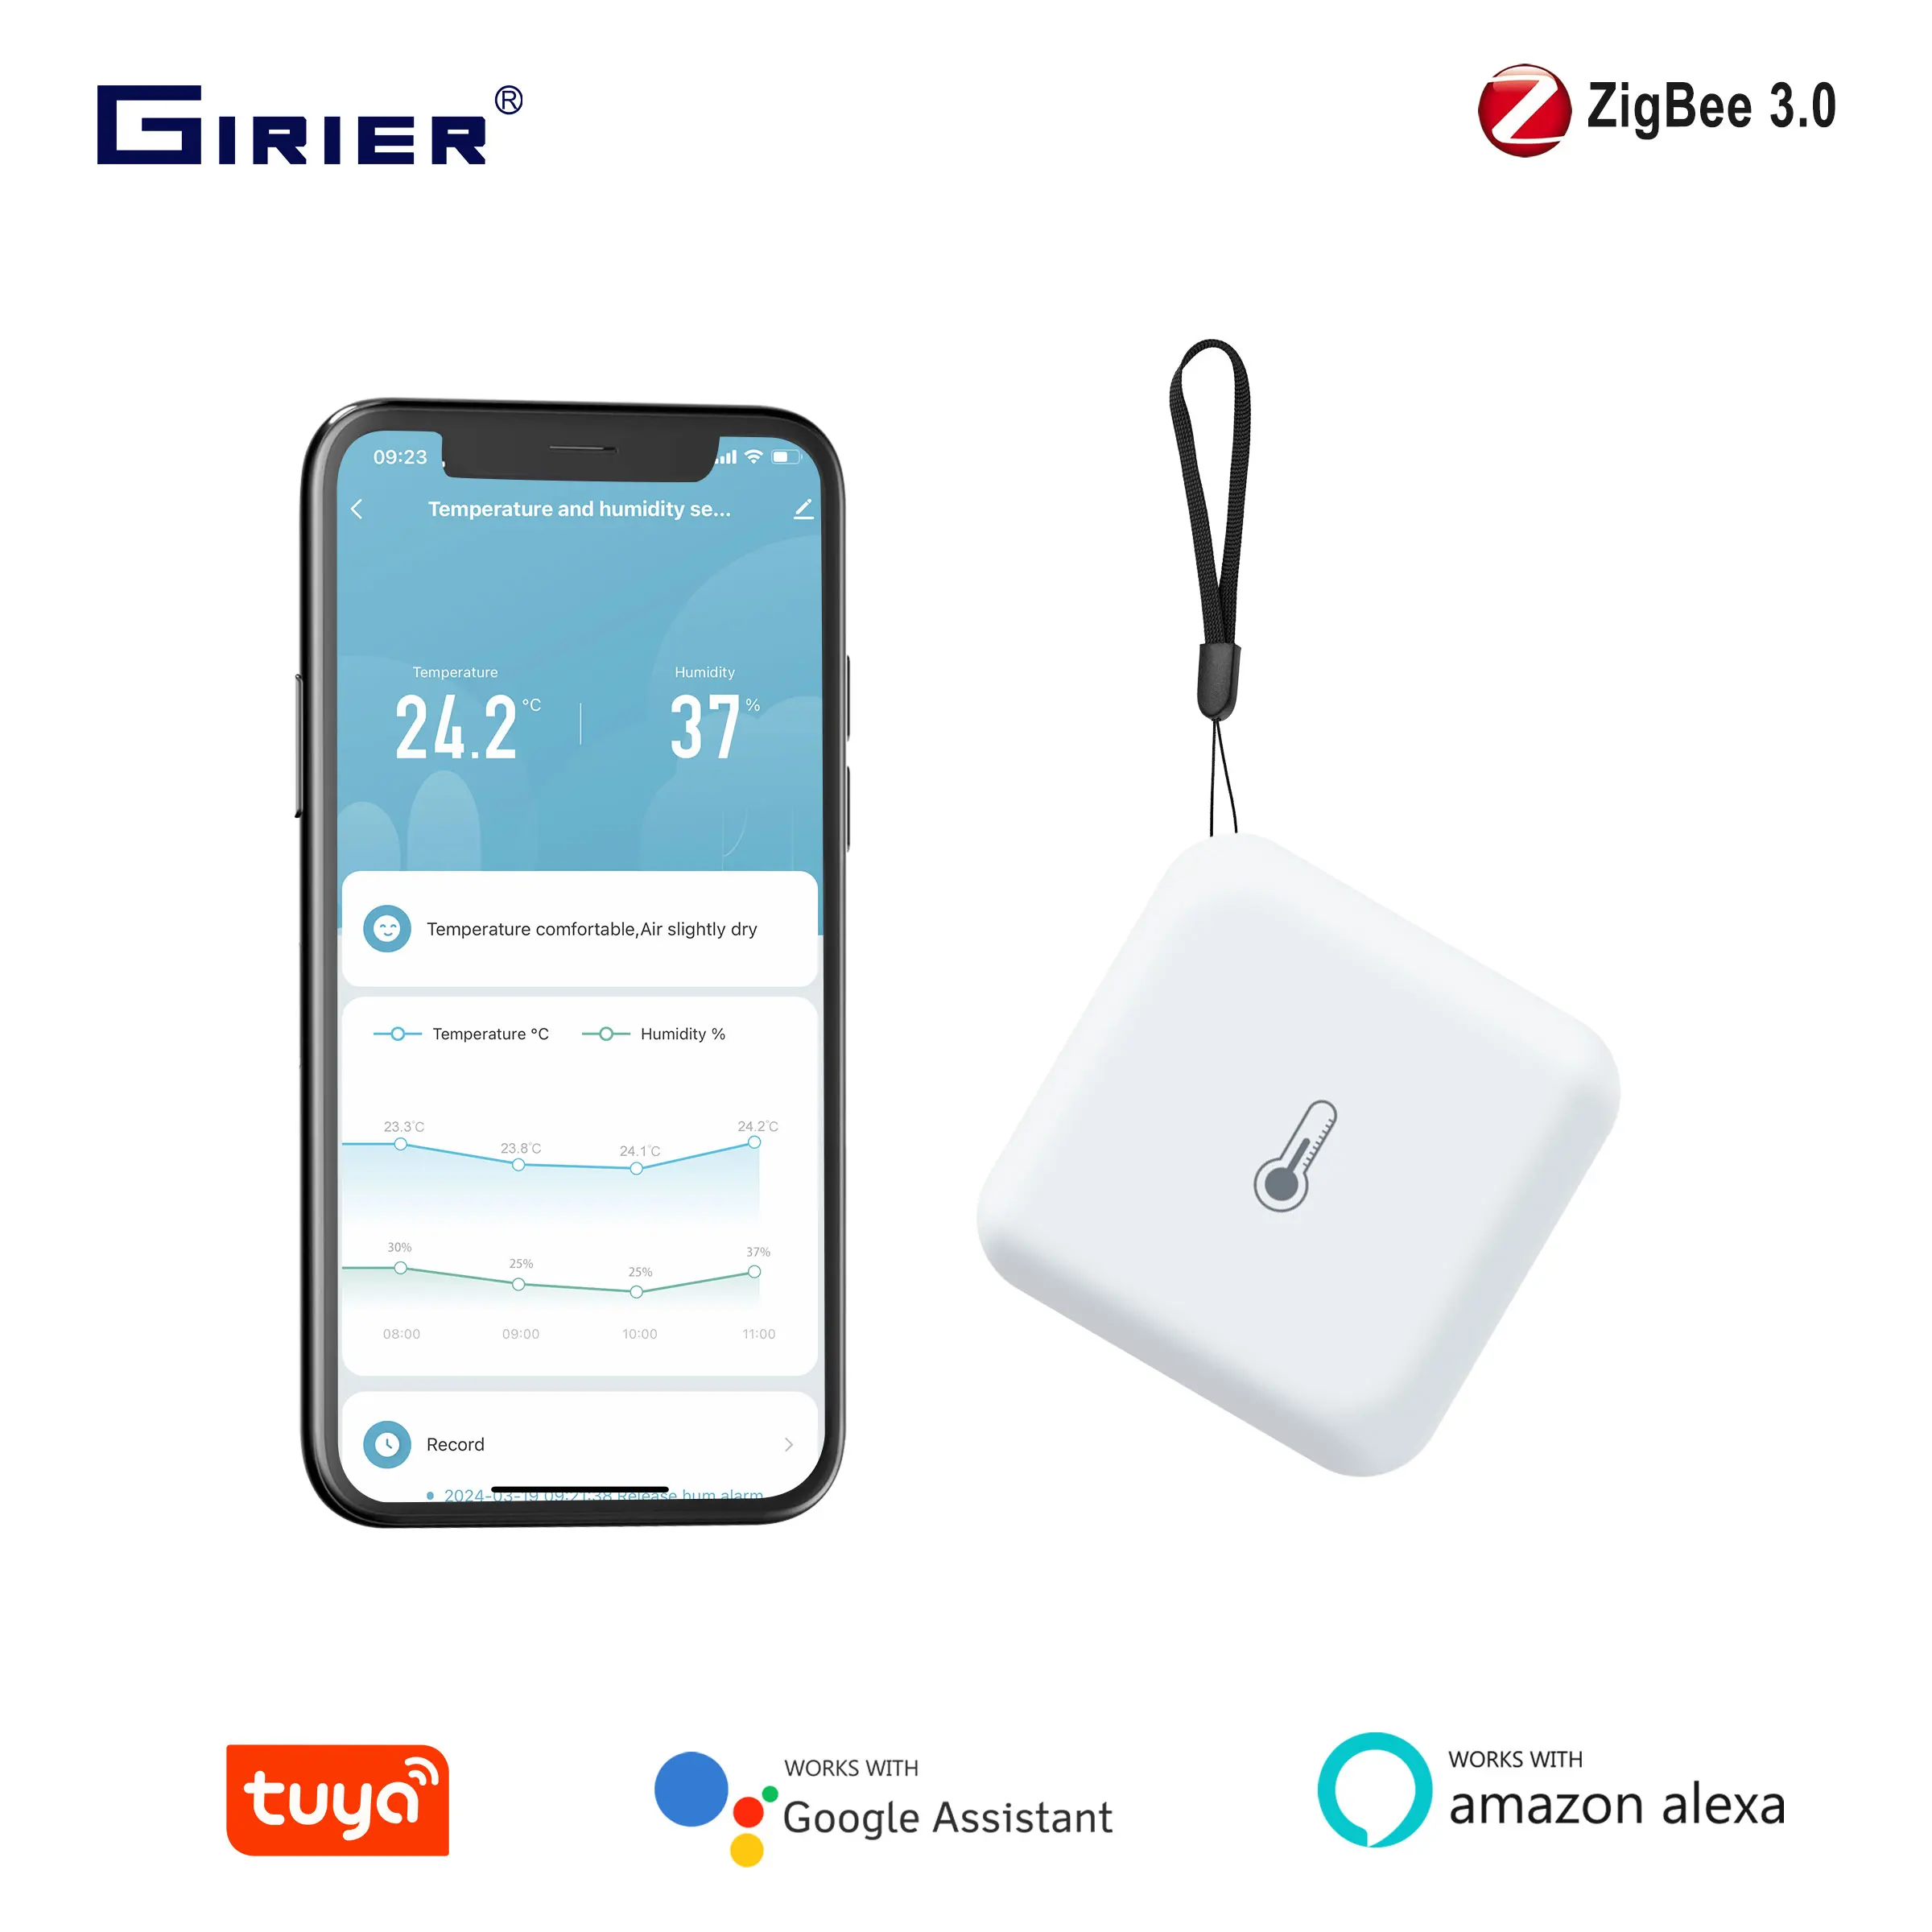 

GIRIER Tuya ZigBee Temperature Humidity Sensor Smart Home Thermometer Indoor Hygrometer Supports Alexa Hey Google Home Assistant